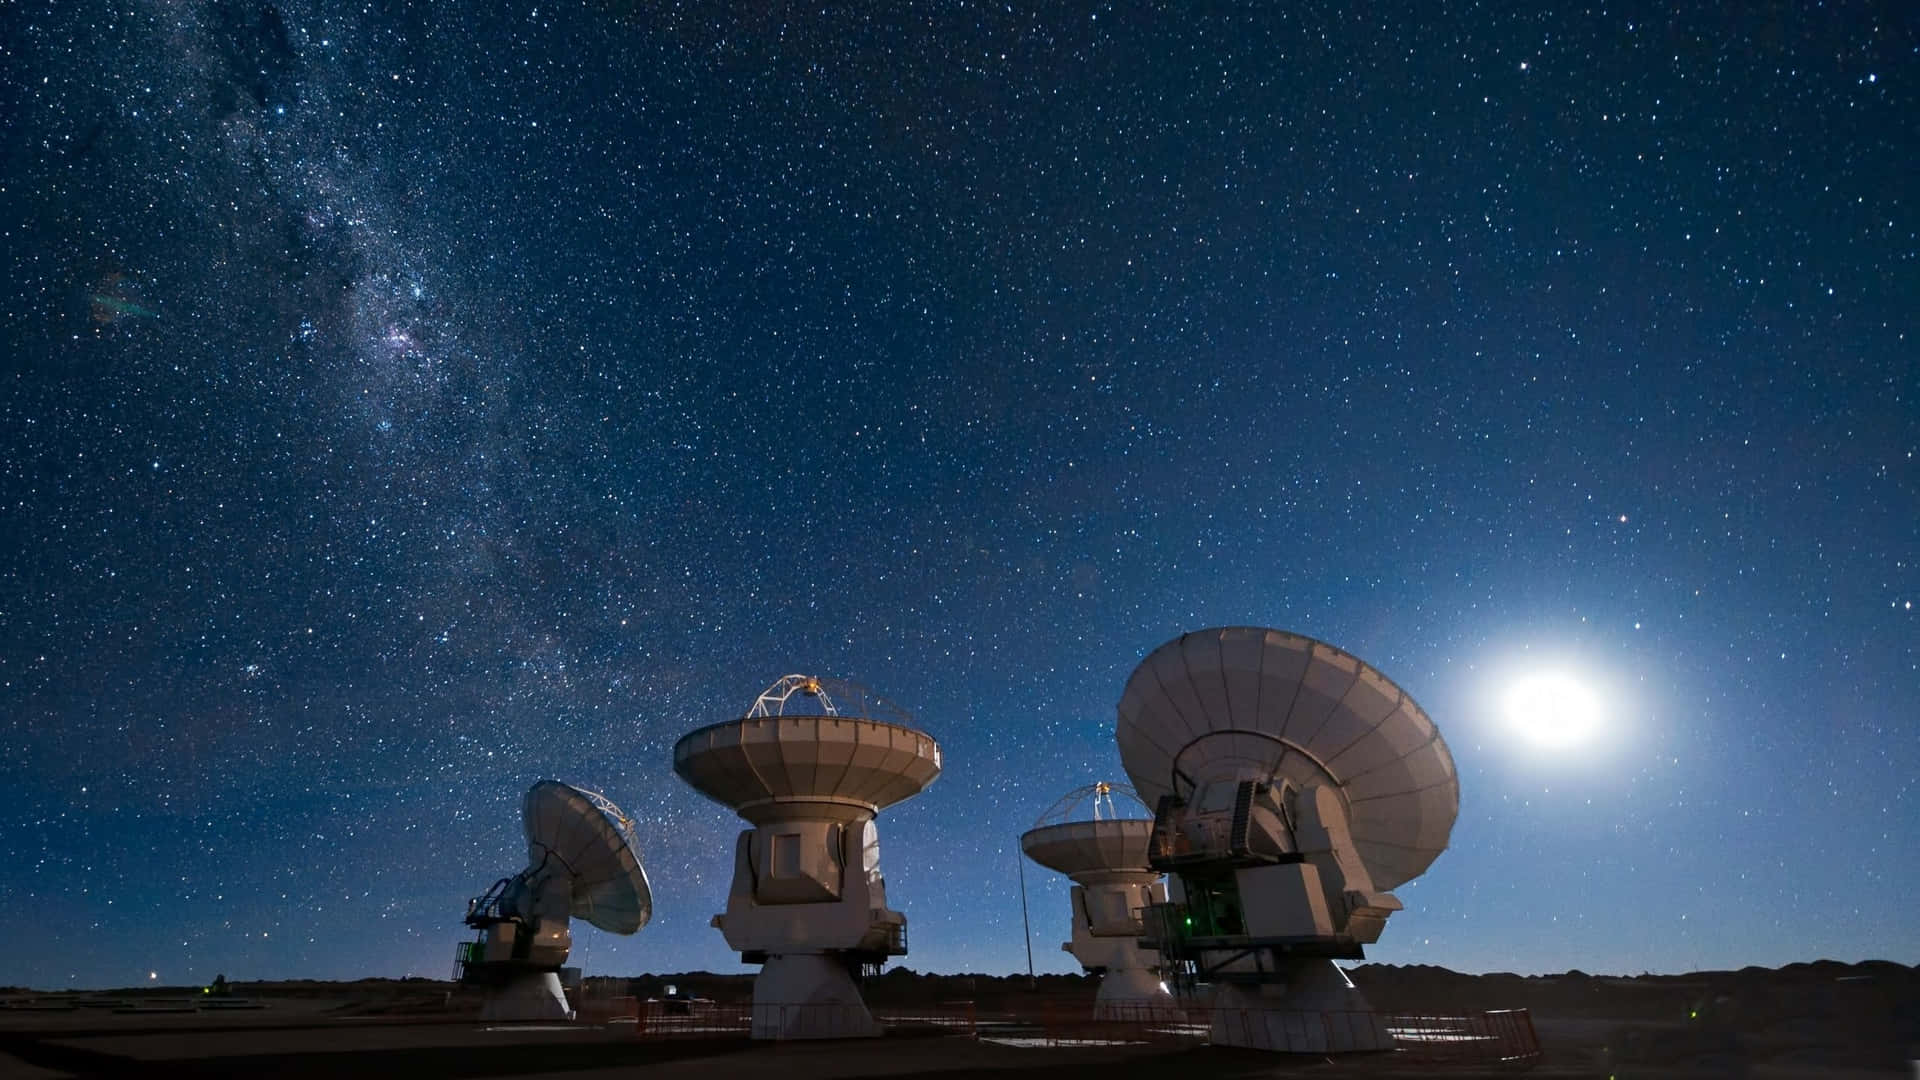 a group of radio telescopes under the night sky